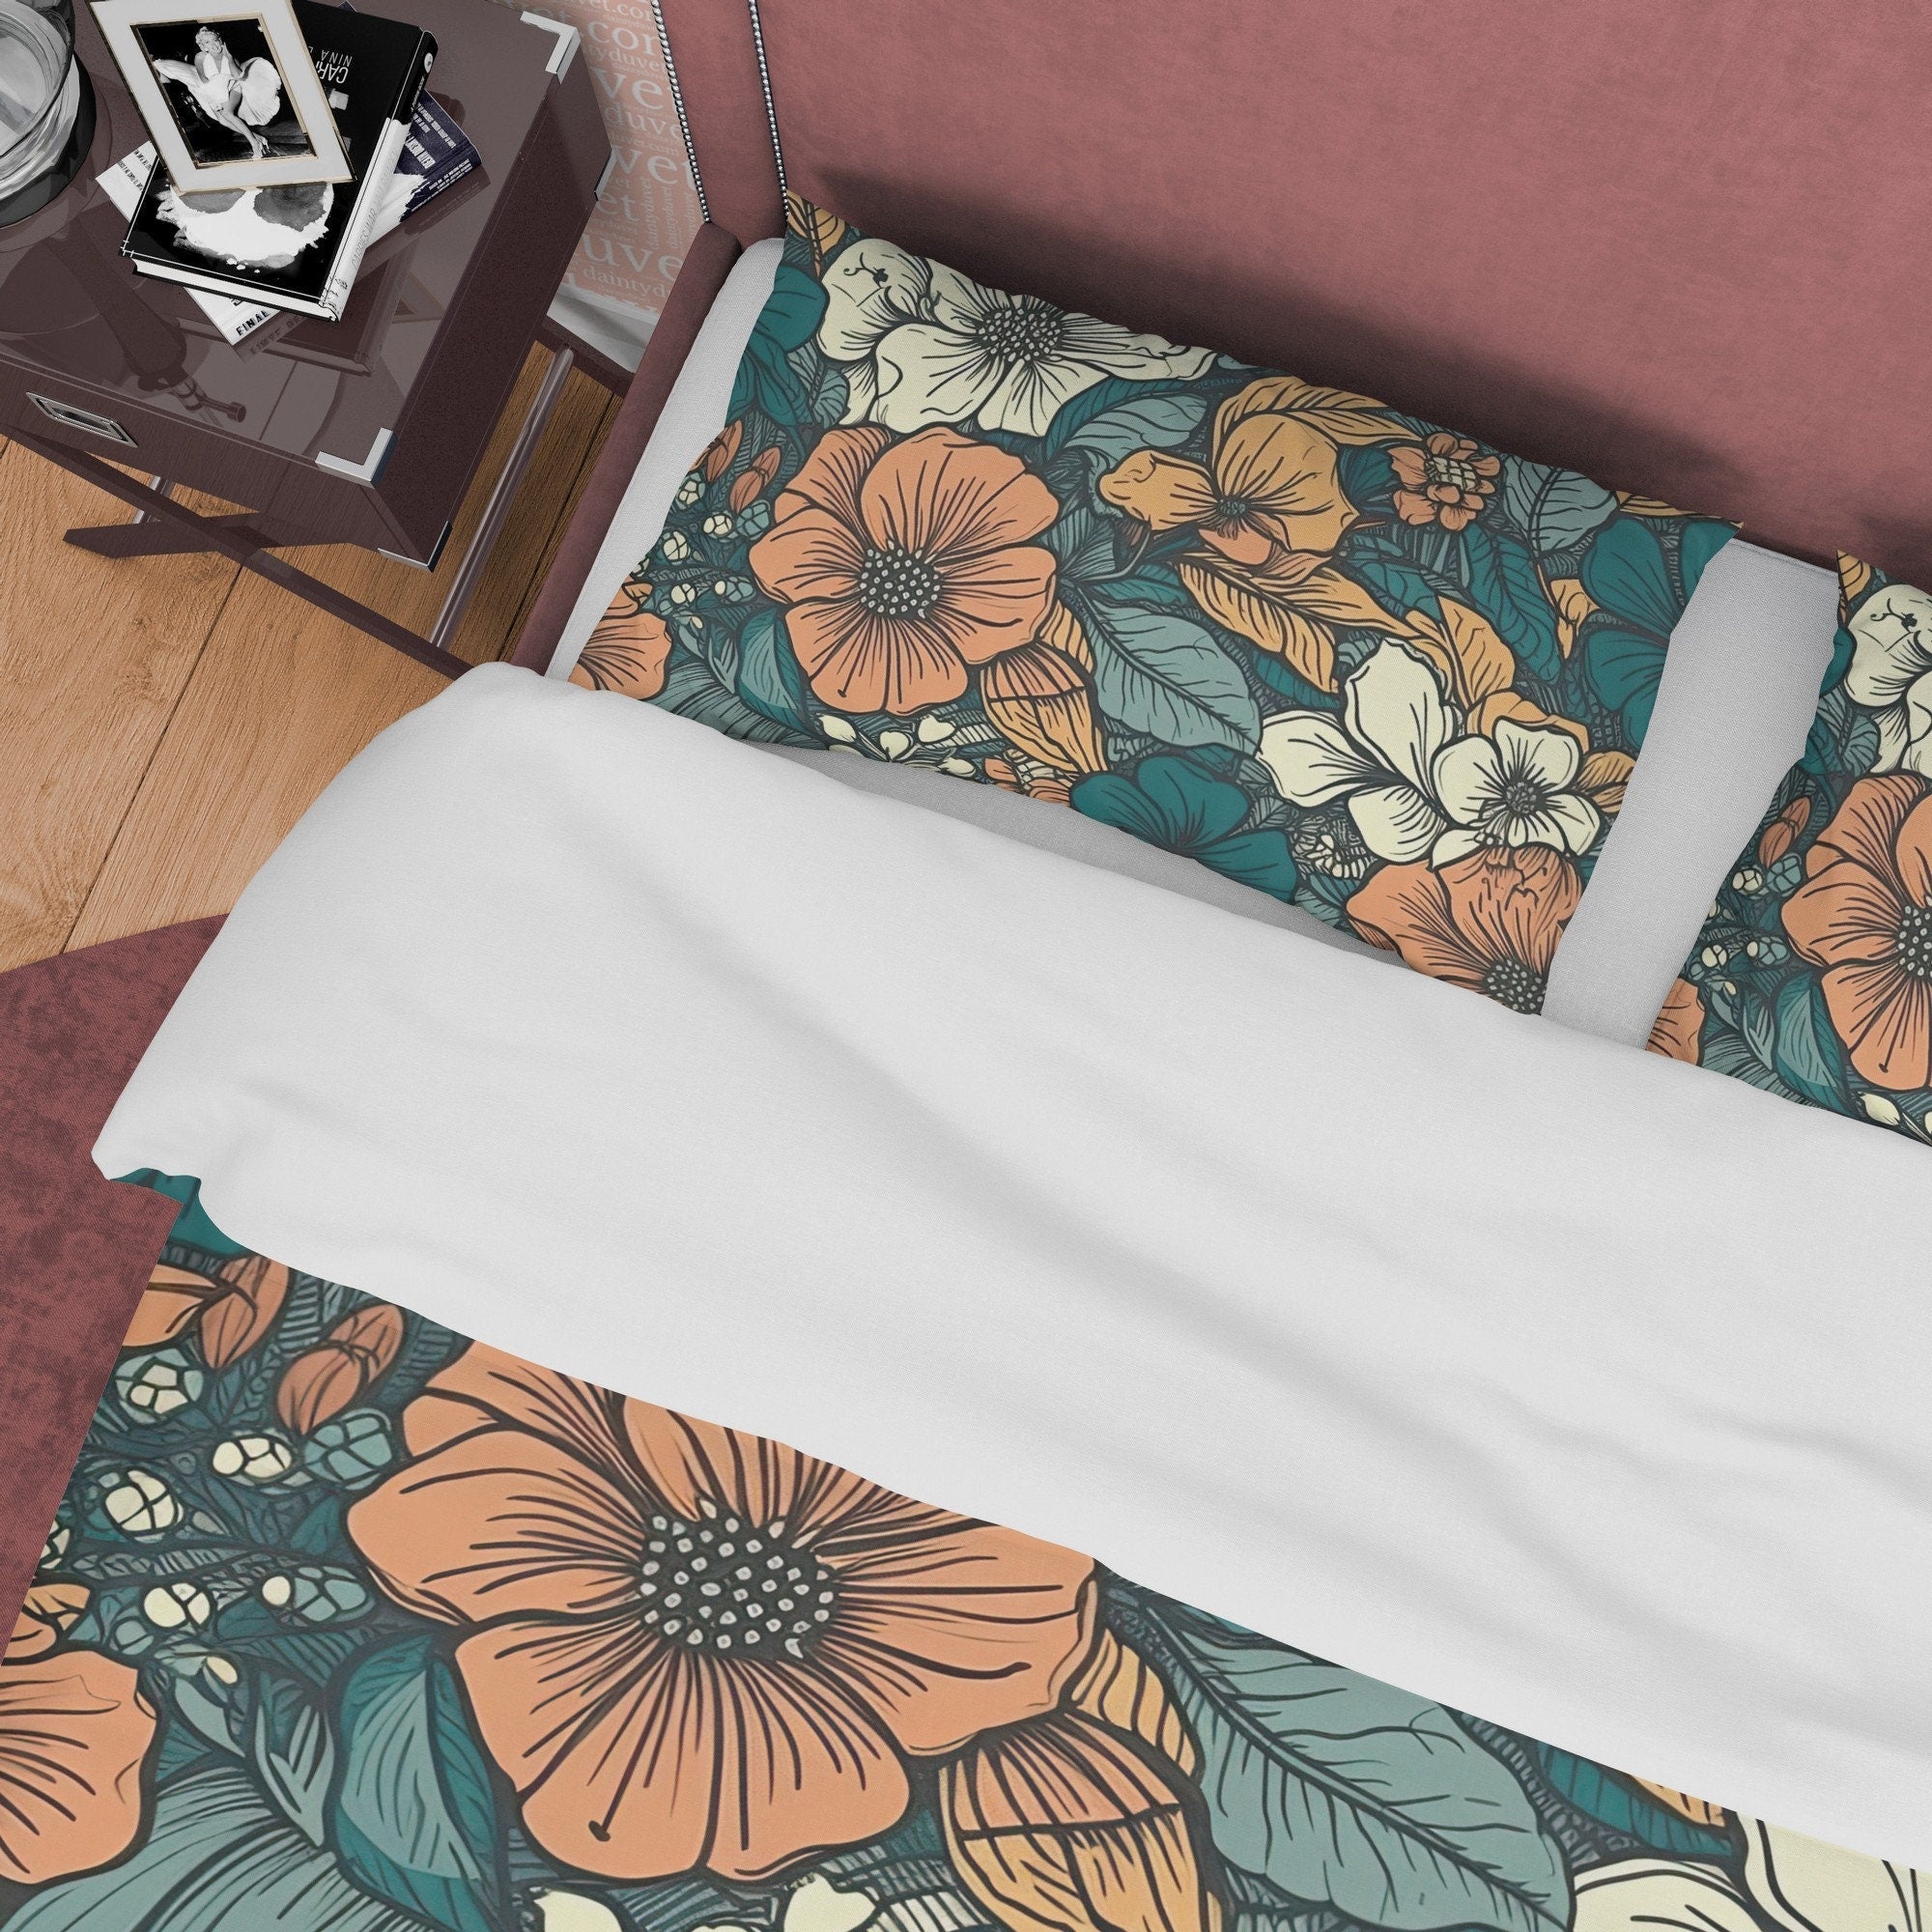 Floral Retro Bedding Set, Green Cotton Duvet Cover, Random Flower Quilt Cover, Unique Bedspread, 70's Nostalgia Bed Cover, Zipper Bedding